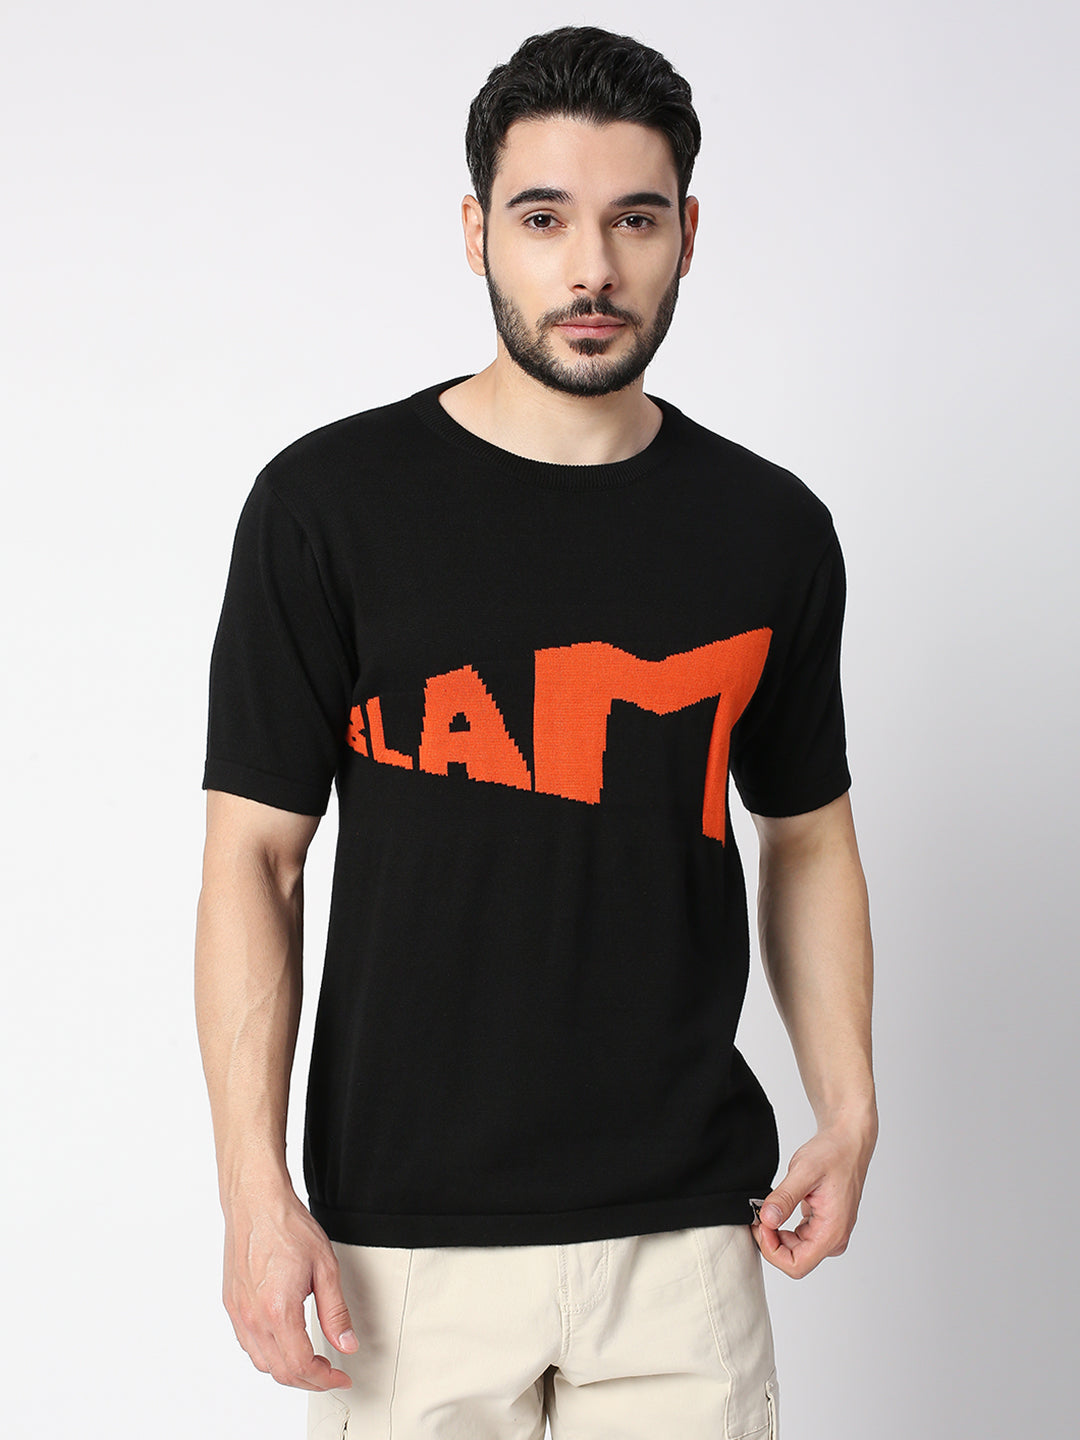 Buy Blamblack Black Knitted Half Sleeved T-shirt